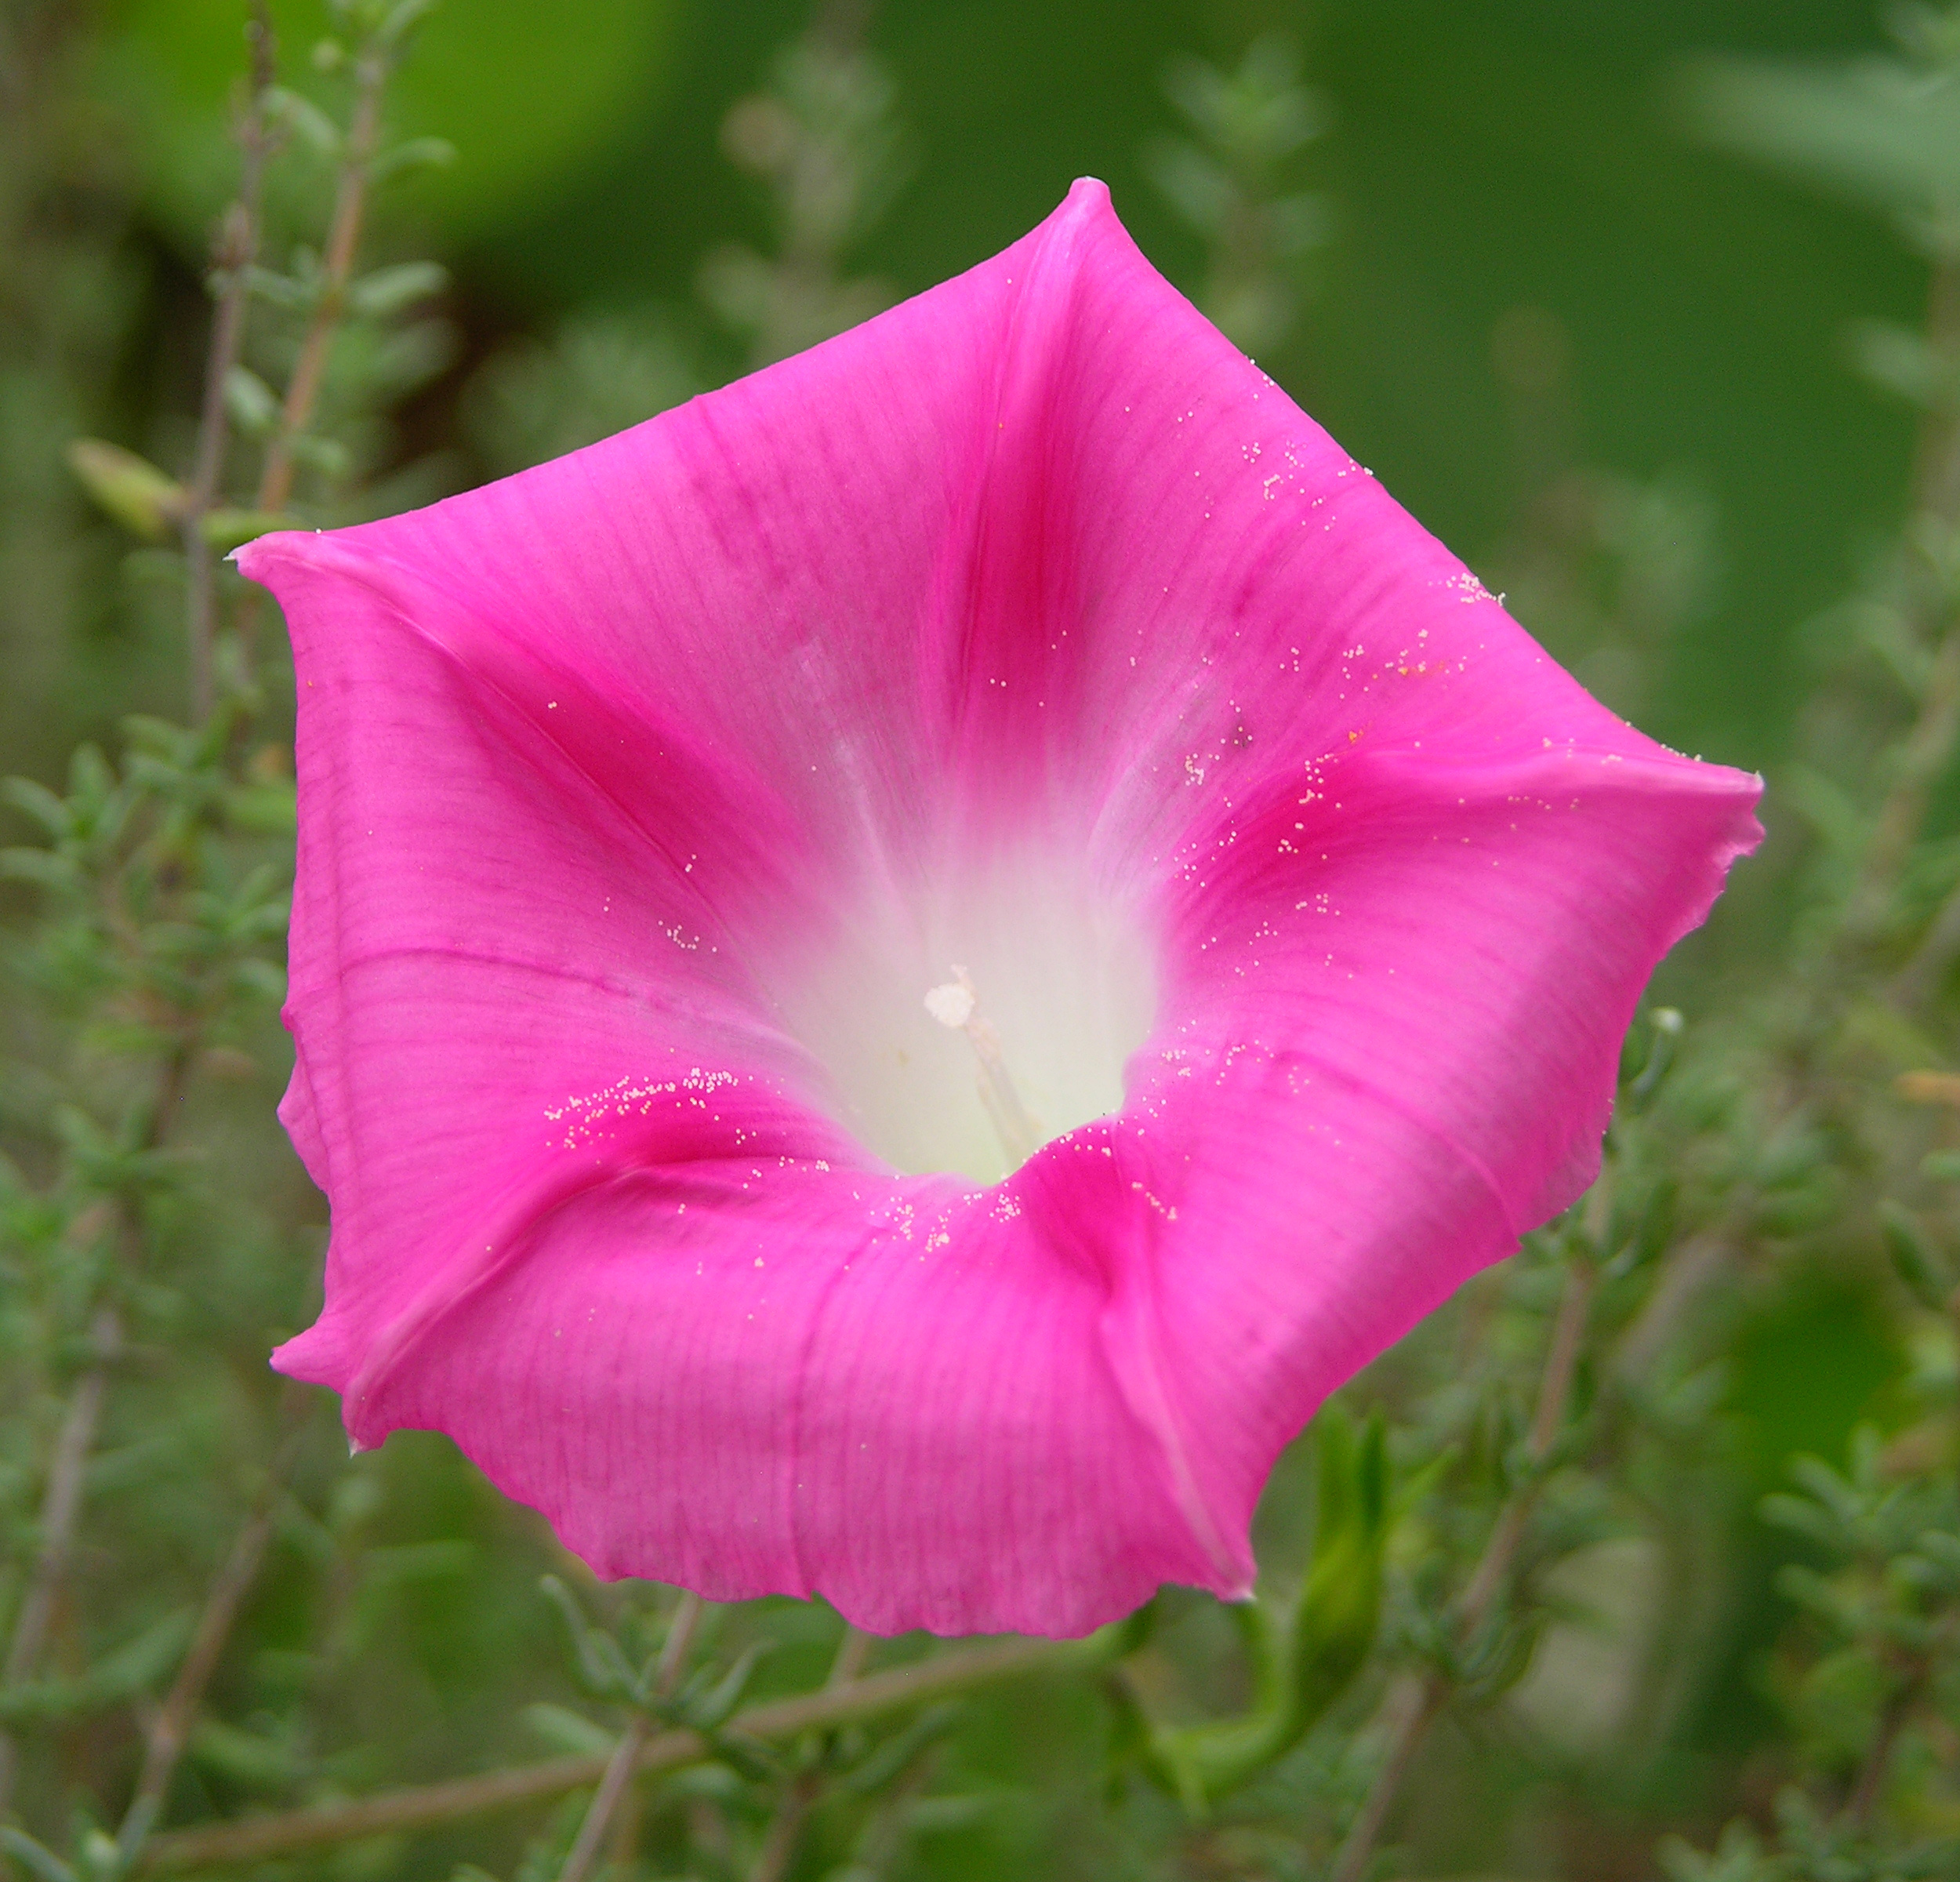 File:Pink Morning Glory 2500px.jpg - Wikipedia, the free encyclopedia